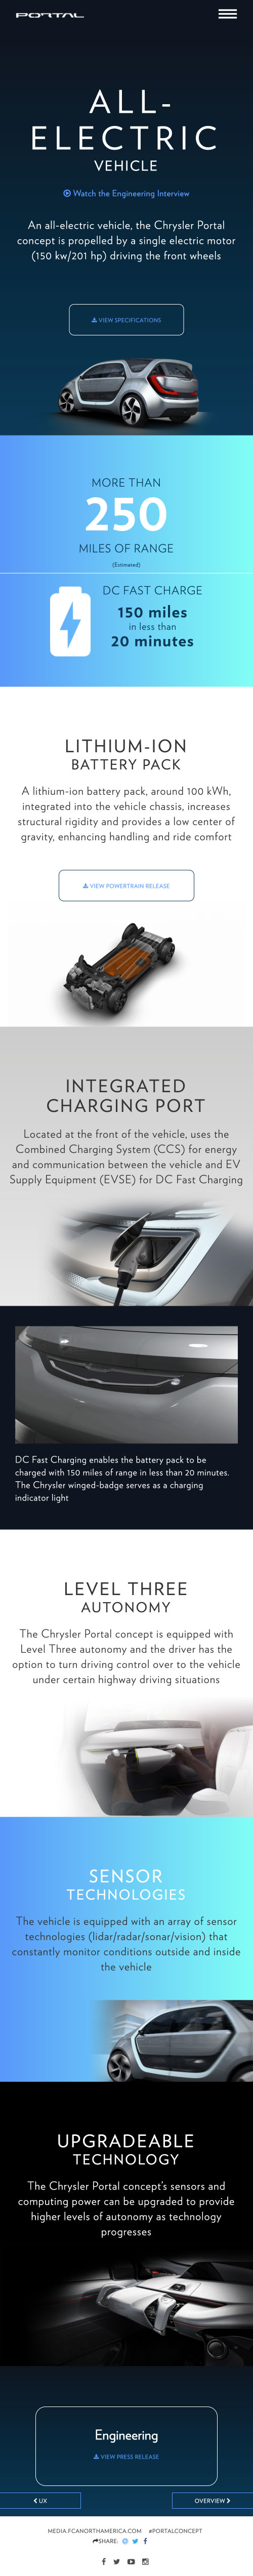 Chrysler Airflow Concept screen.